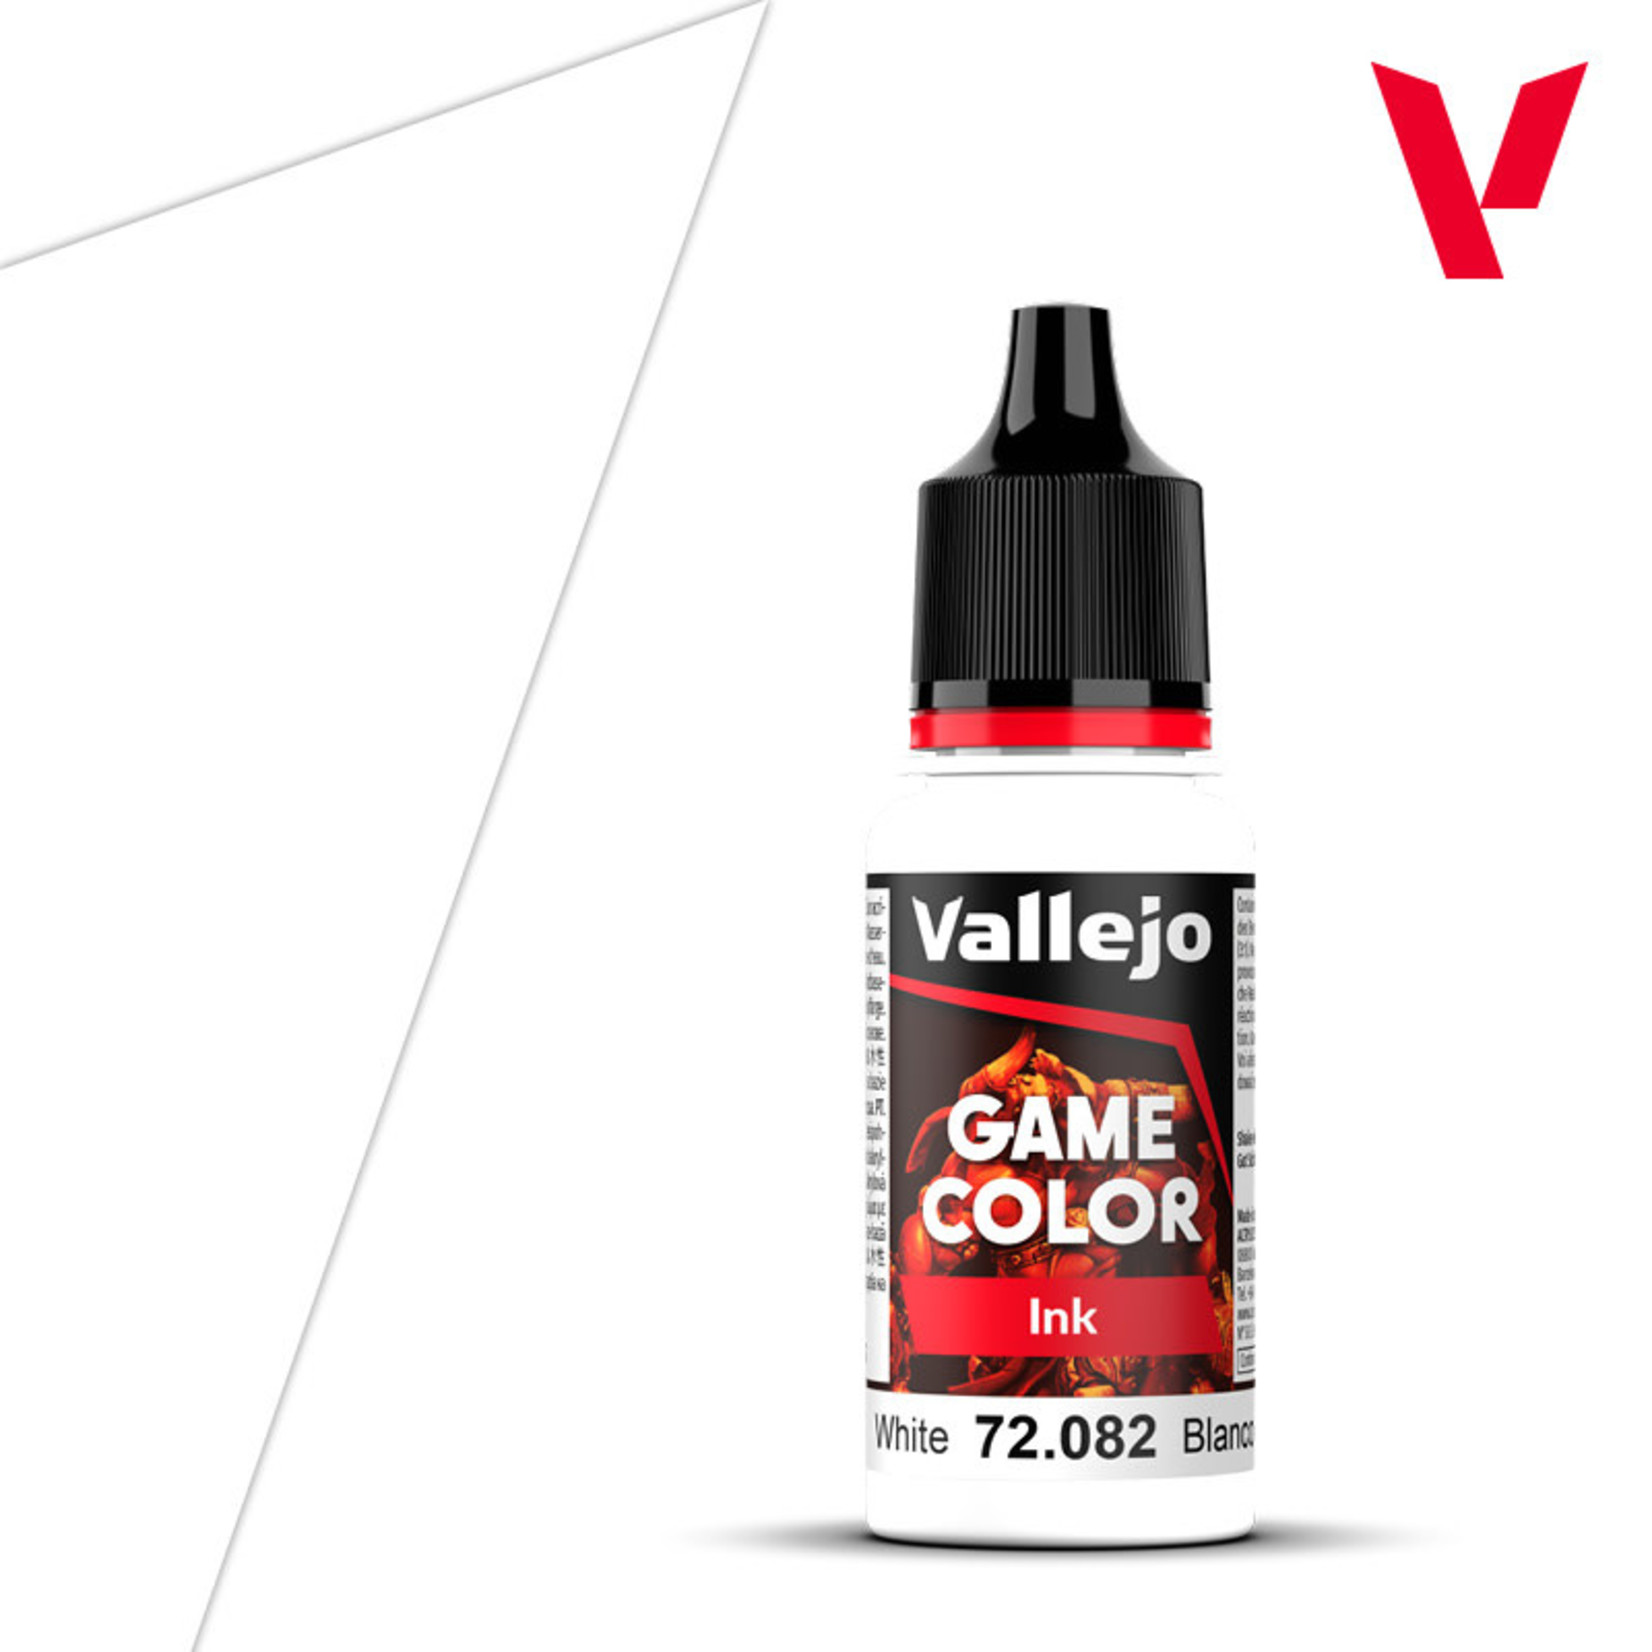 Vallejo Game Color Ink White